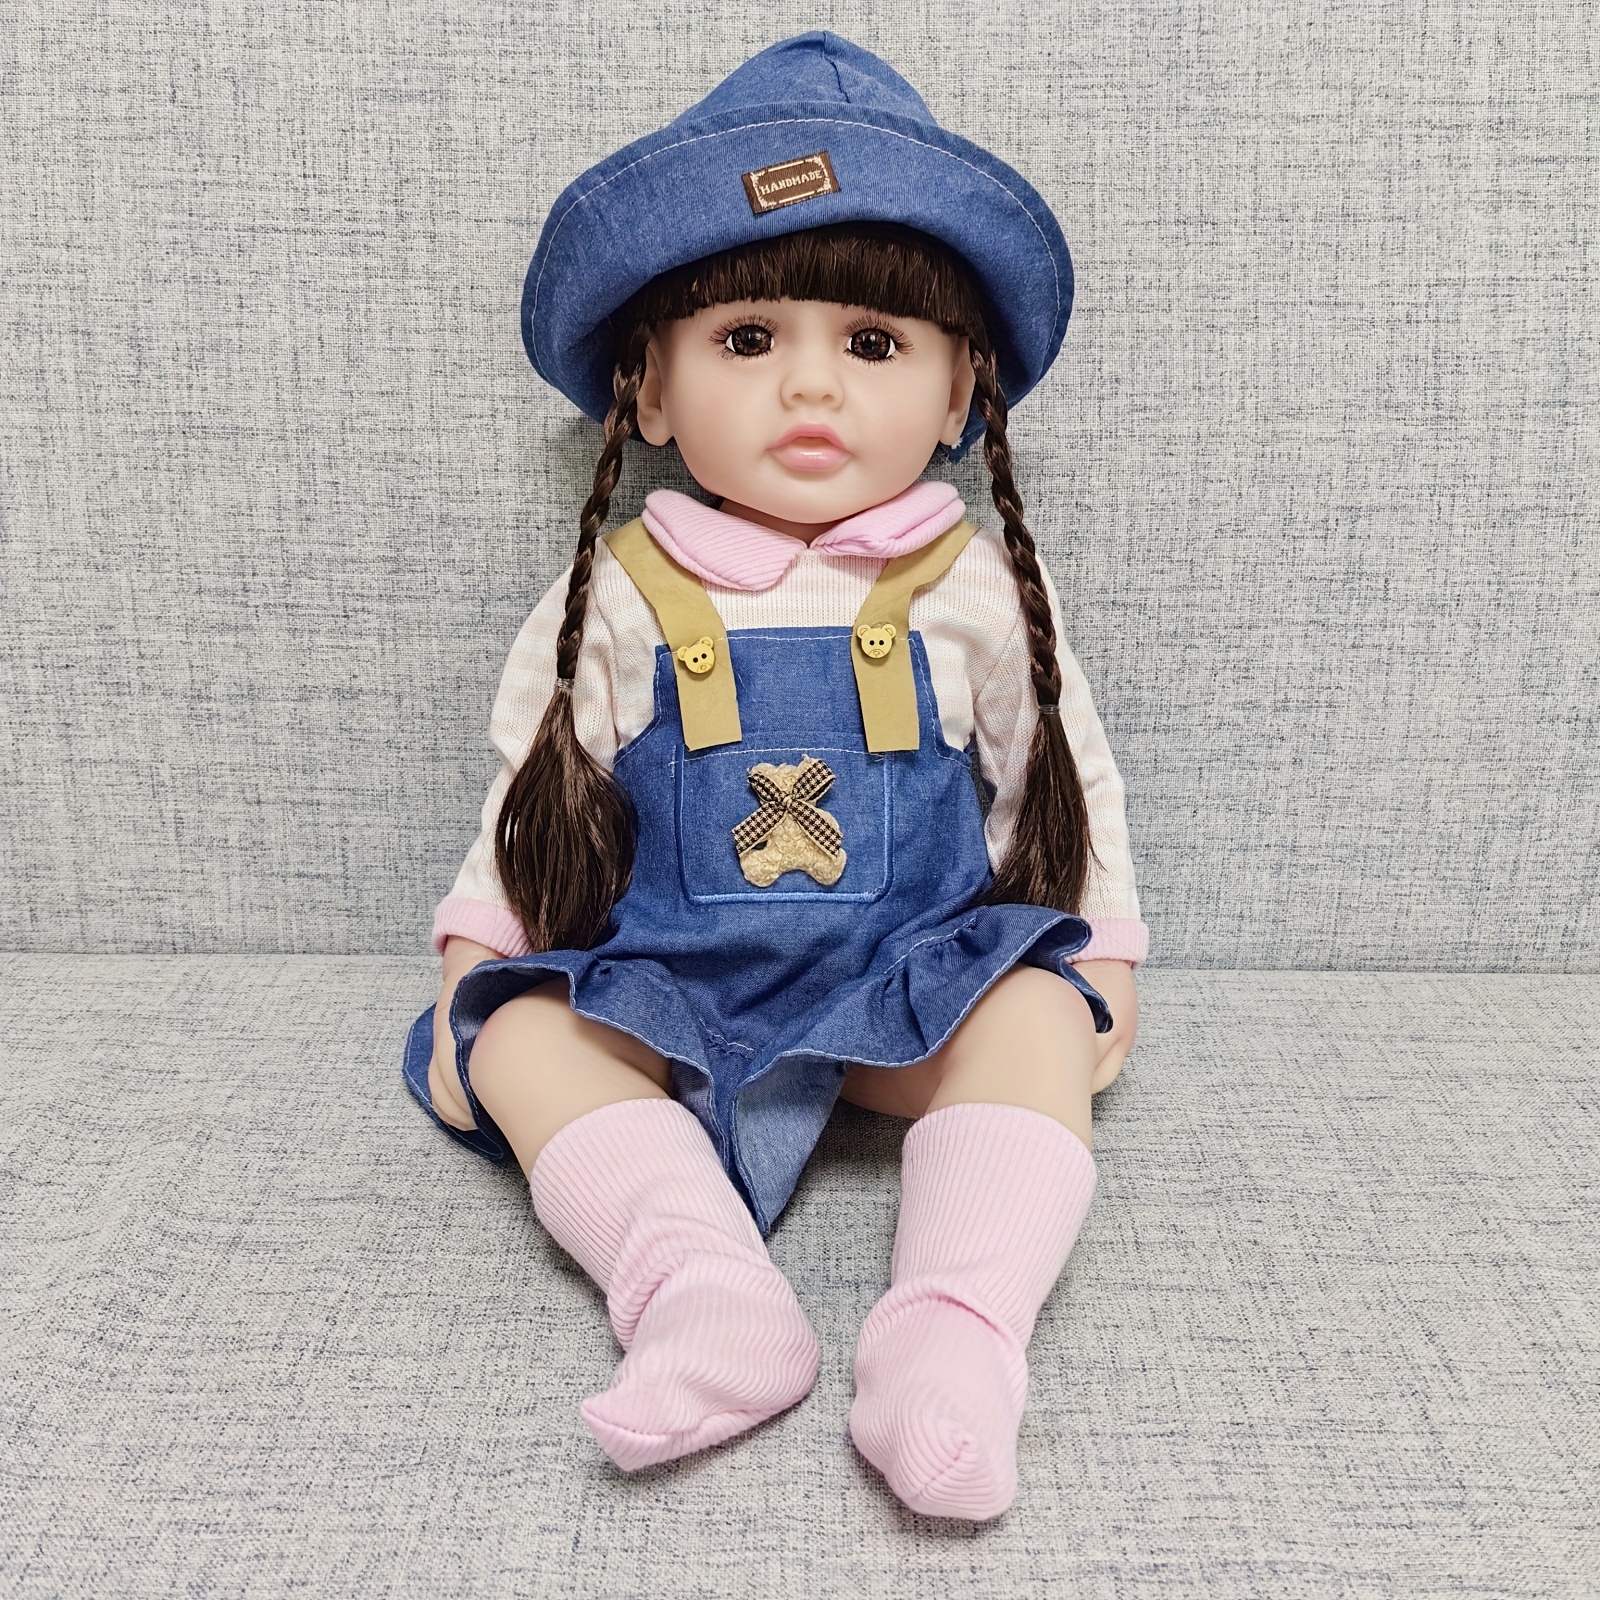 22''/55cm Full Silicone Body Reborn Baby Doll Toy For Girl, Vinyl Newborn  Princess Bebe Accompanying Toy